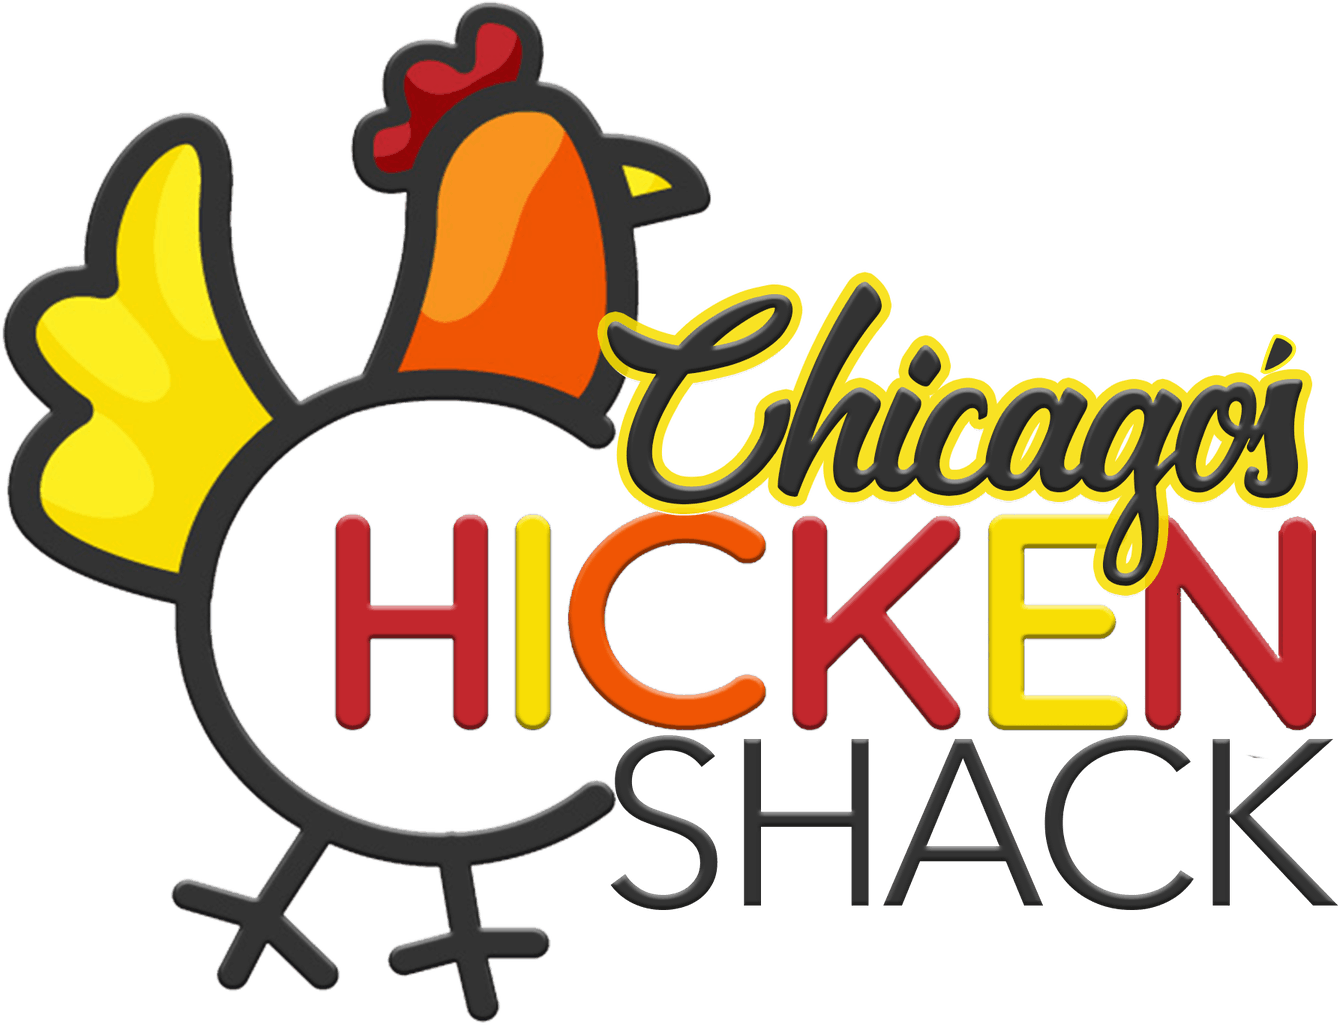 Chicago's Chicken Shack Home